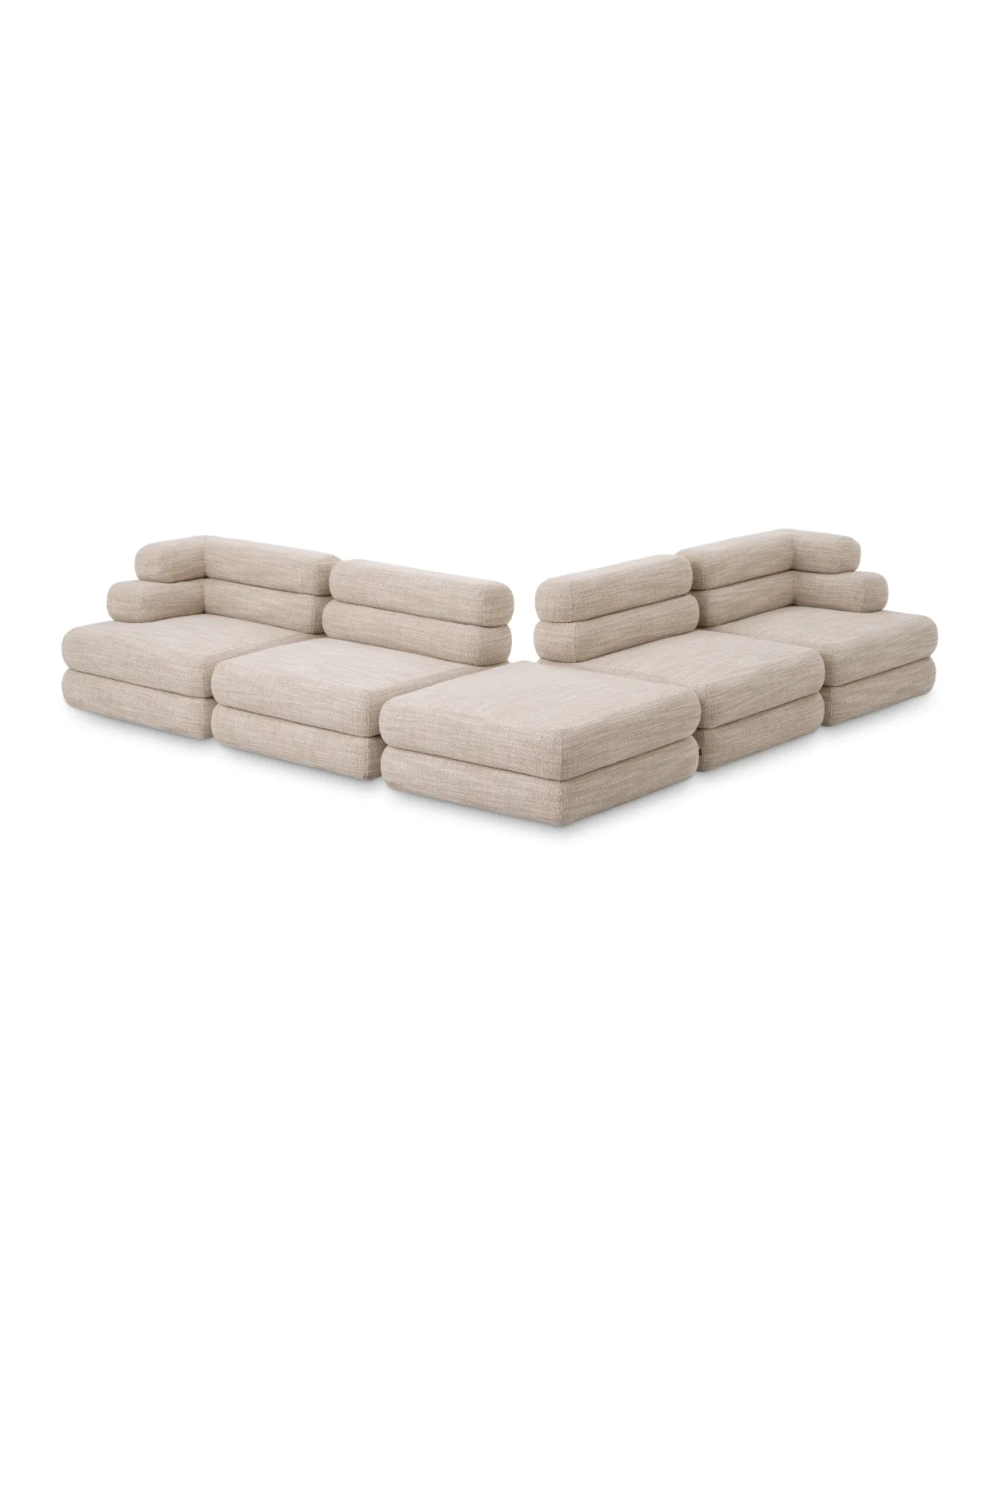  Beige Tiered Modular Sofa | Eichholtz Malaga | Oroa.com